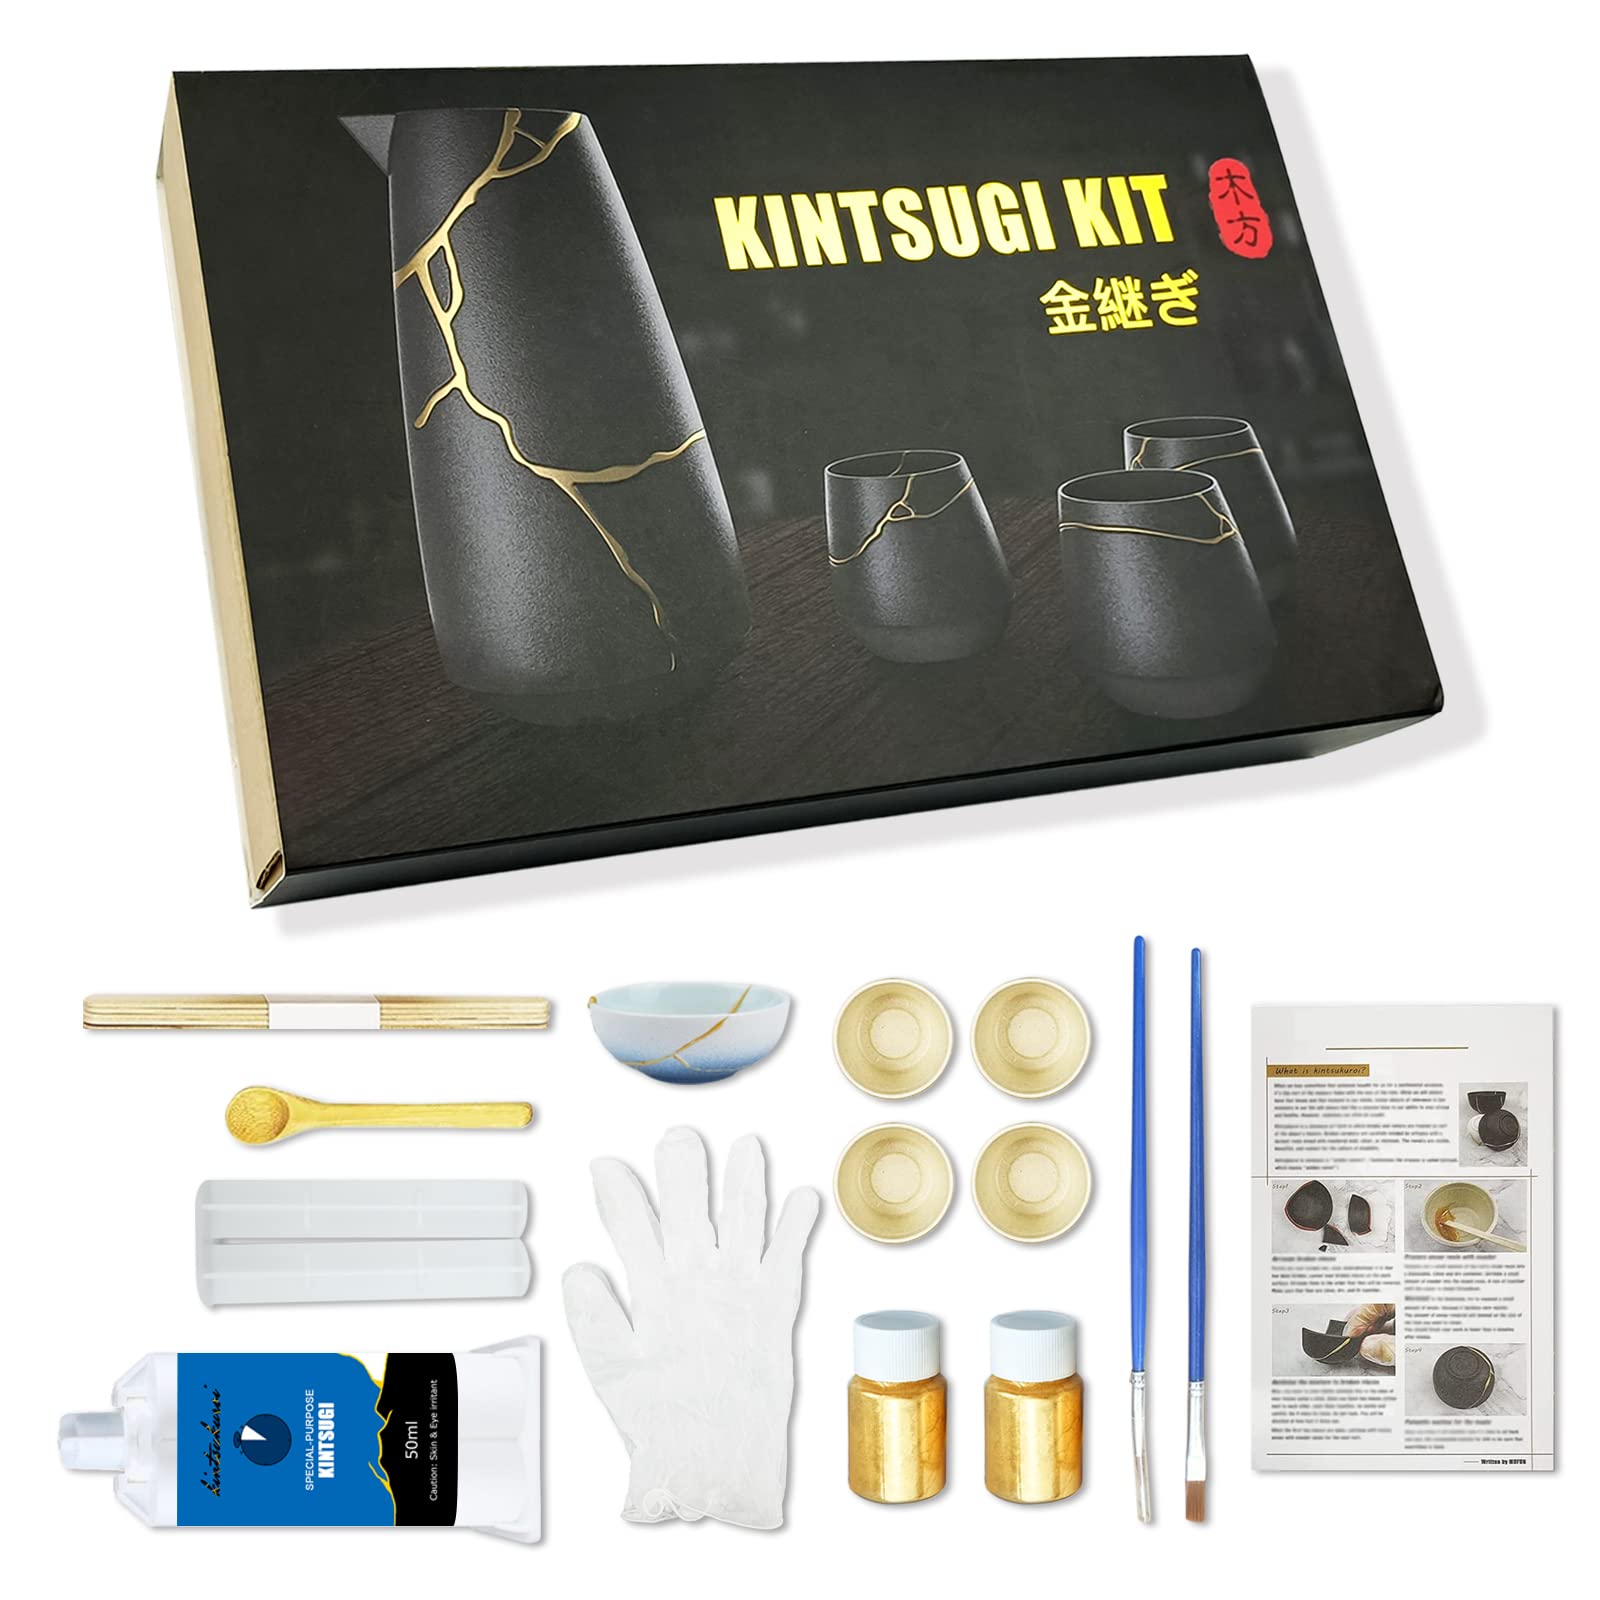 Kintsugi Kit, Kintsugi Repair Kit, Kintsugi Gift, Pottery Repair